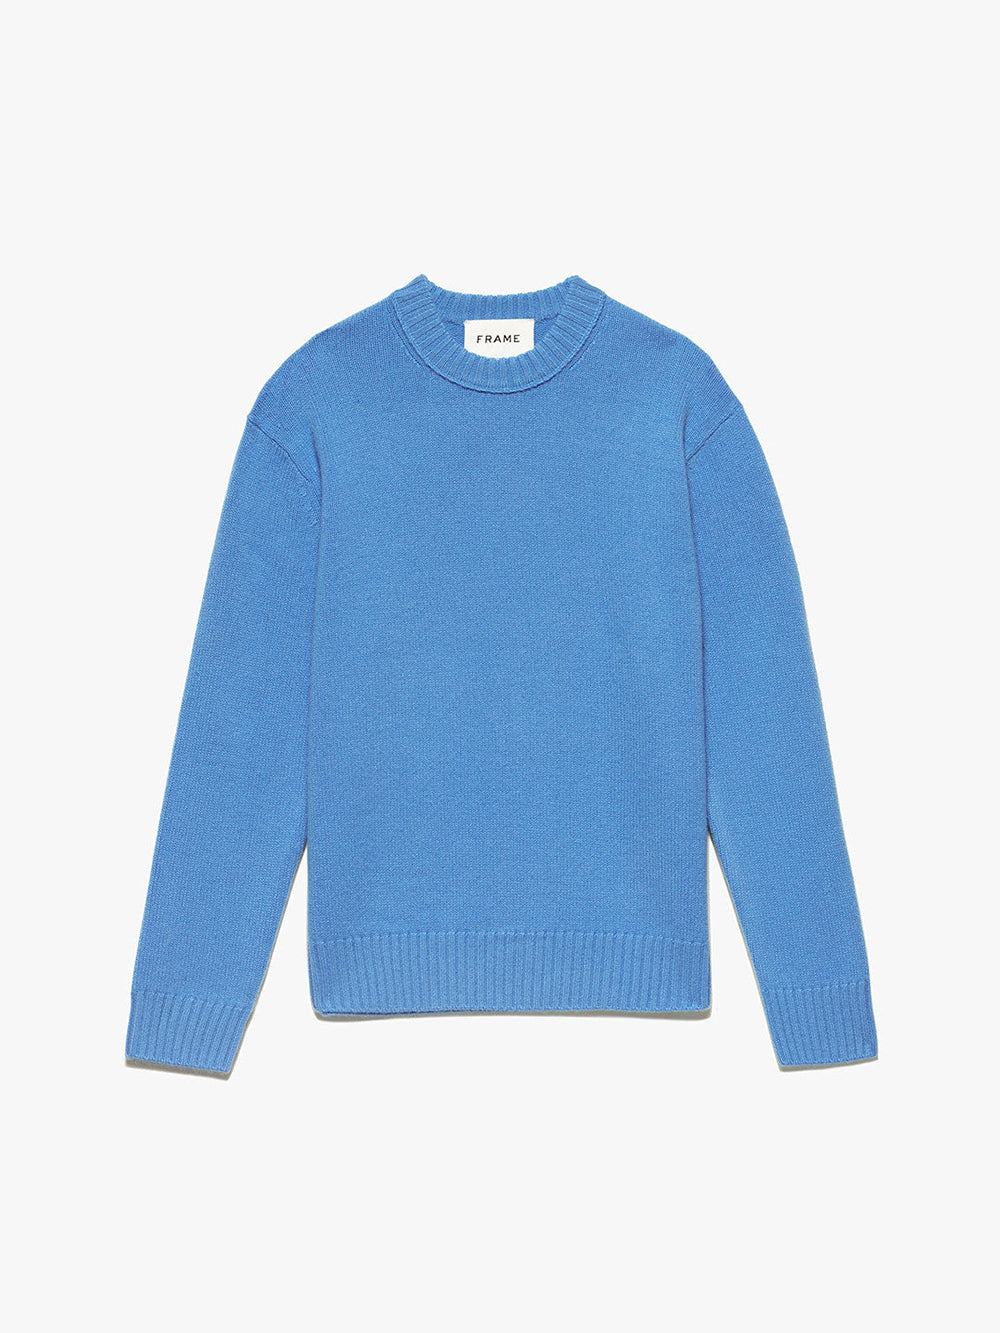 Cashmere Crewneck Sweater in Bright Blue – FRAME